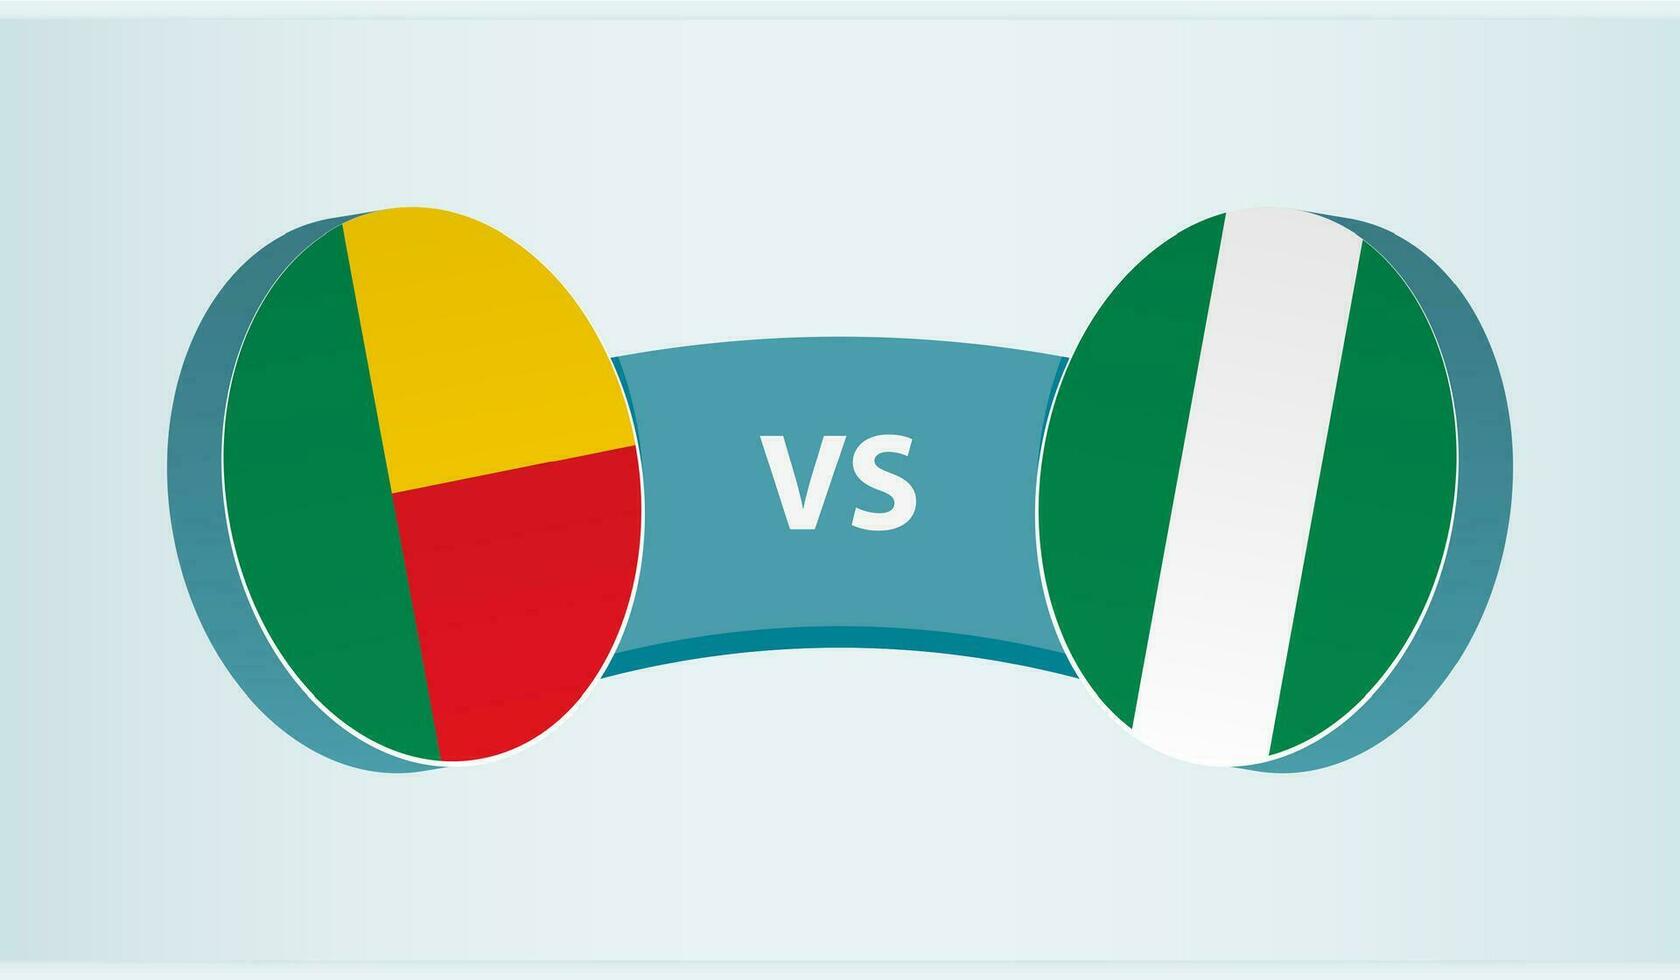 benin versus Nigéria, equipe Esportes concorrência conceito. vetor